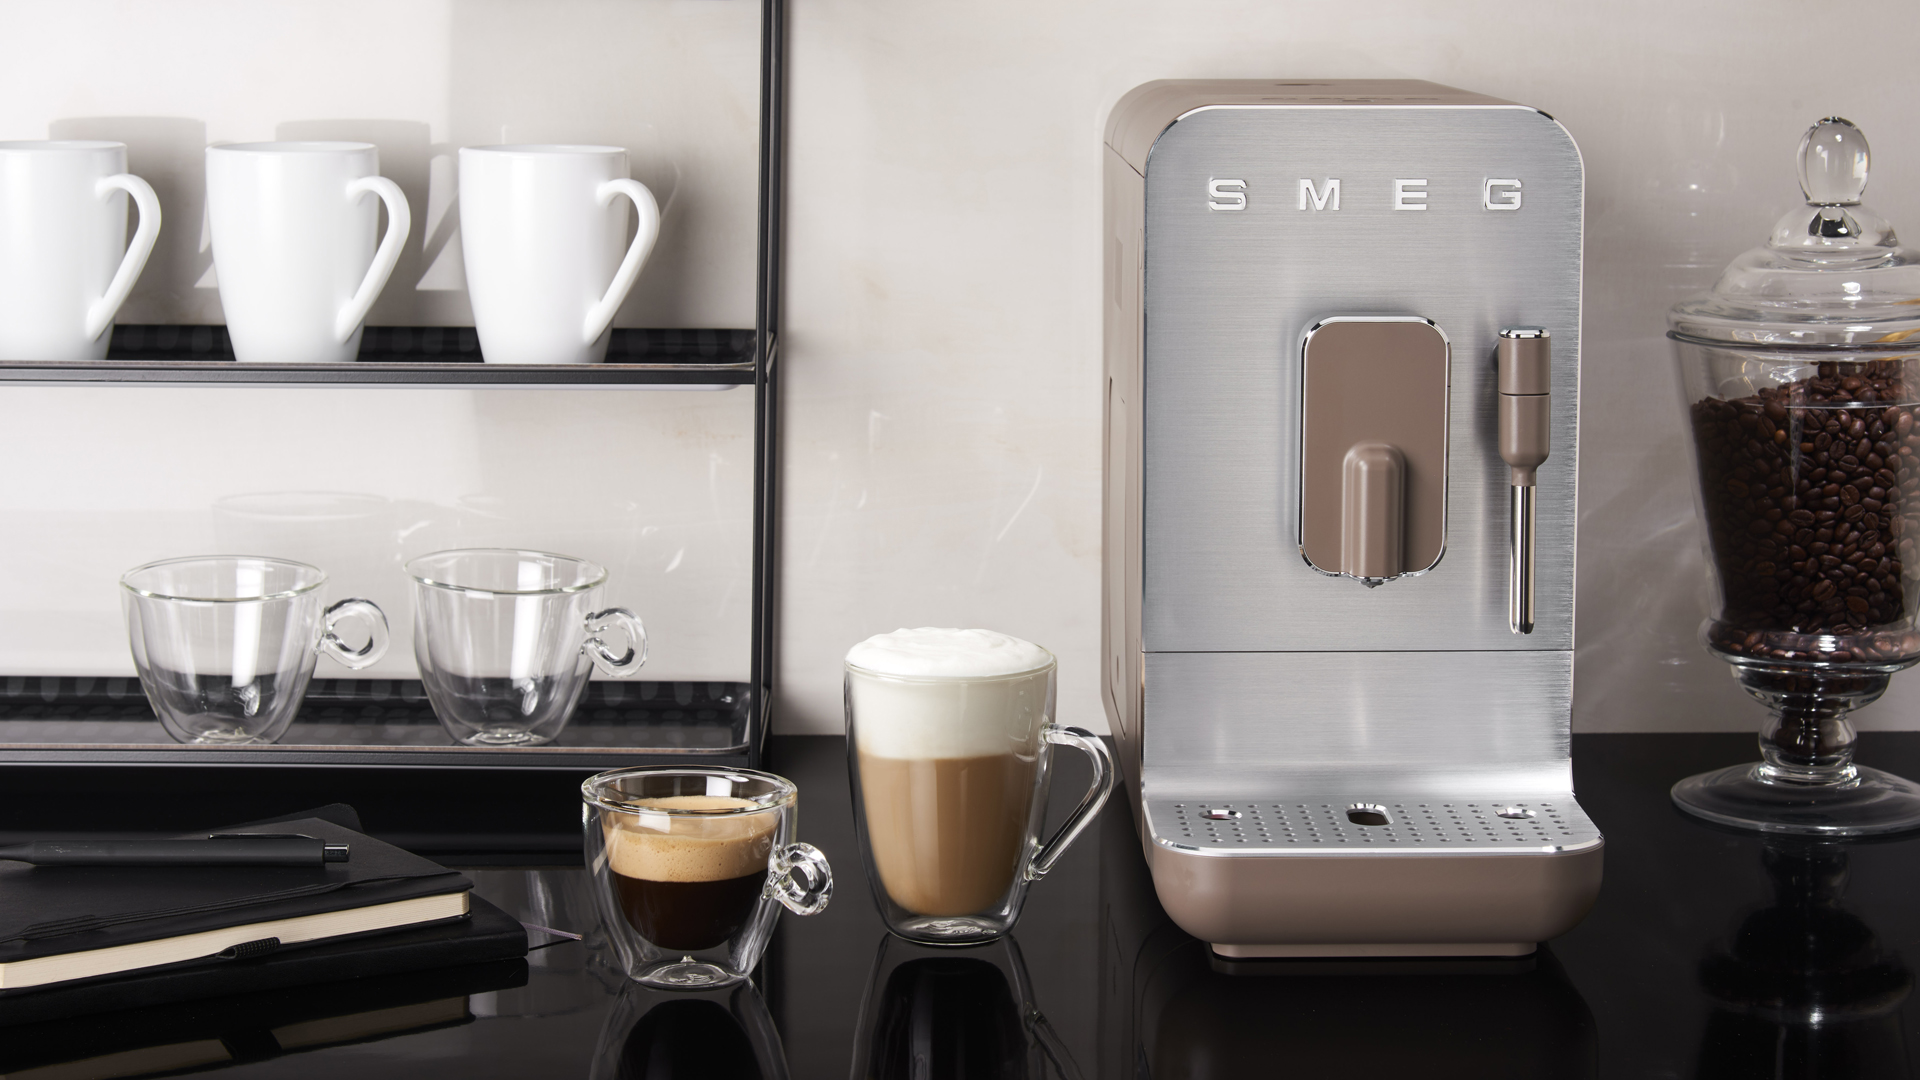 Smeg Coffee Maker - Does Style Match Taste